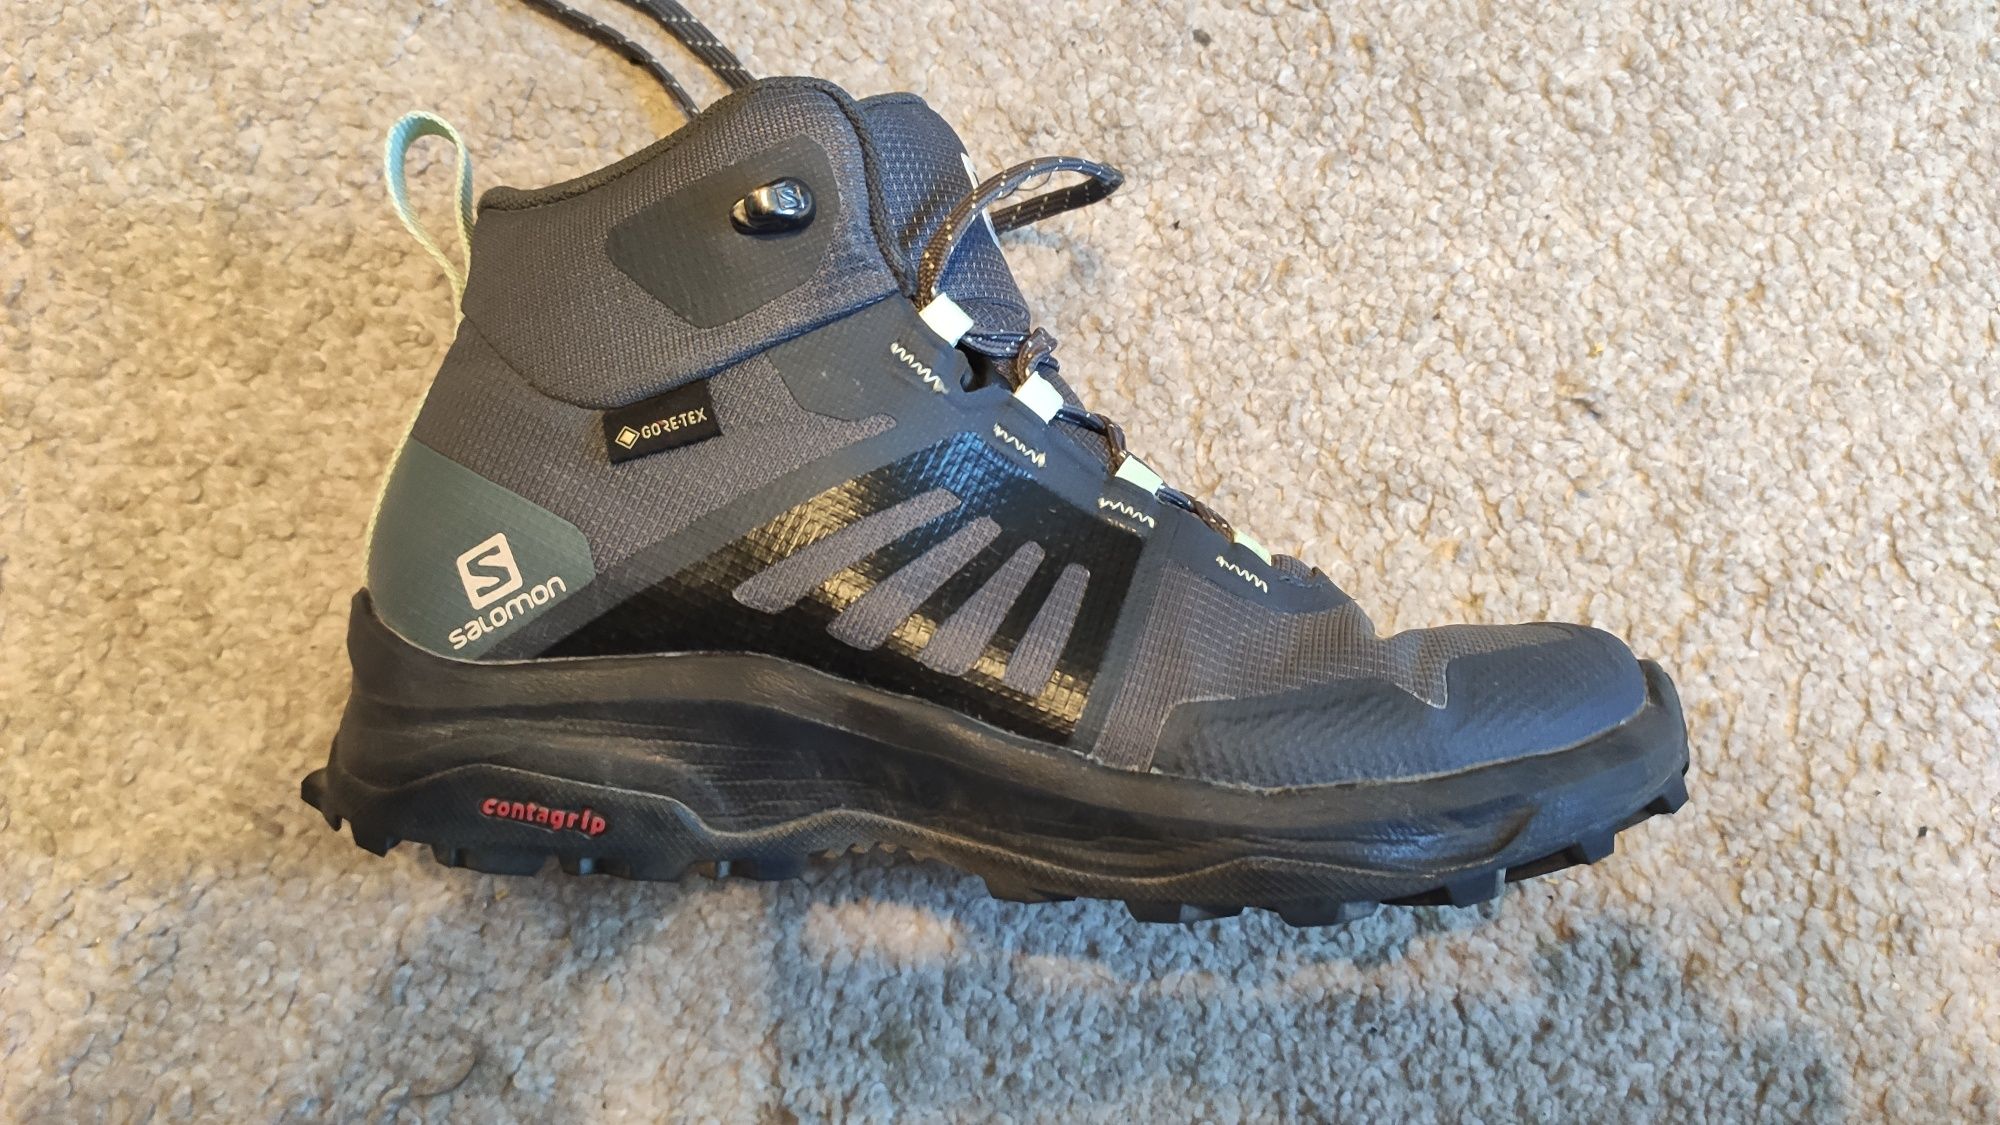 Salomon buty trekkingowe damskie X-Render MID GTX r. 37 1/3